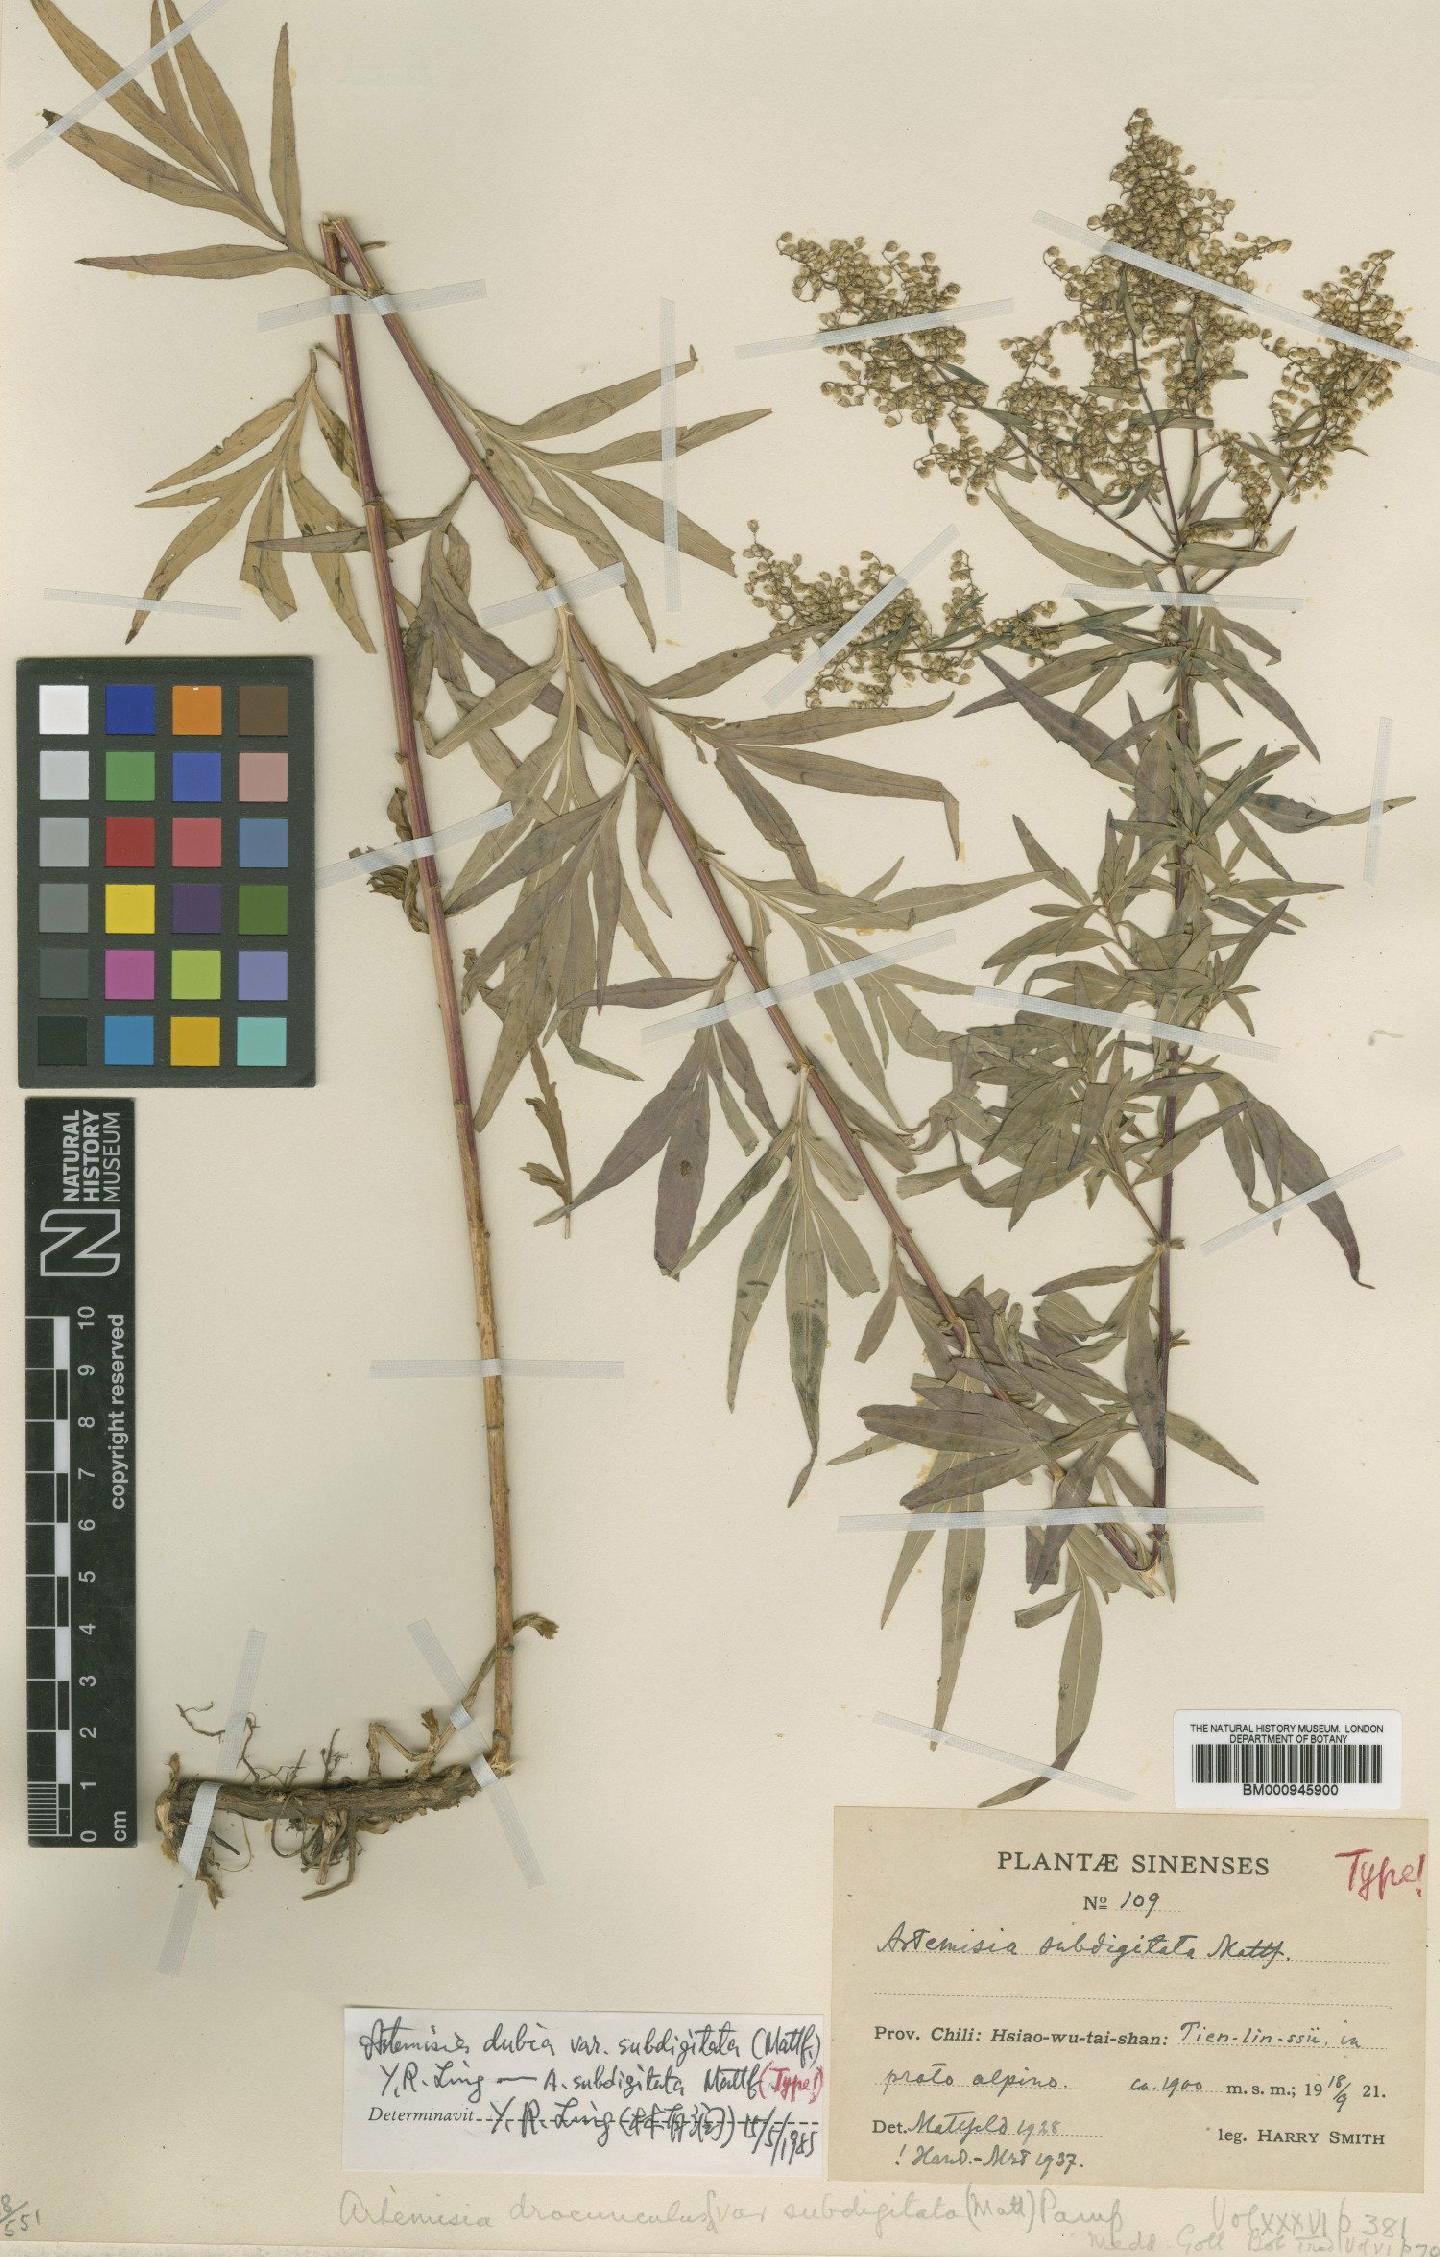 To NHMUK collection (Artemisia dubia var. subdigitata (Mattf.) Y.R.Ling; Type; NHMUK:ecatalogue:473354)